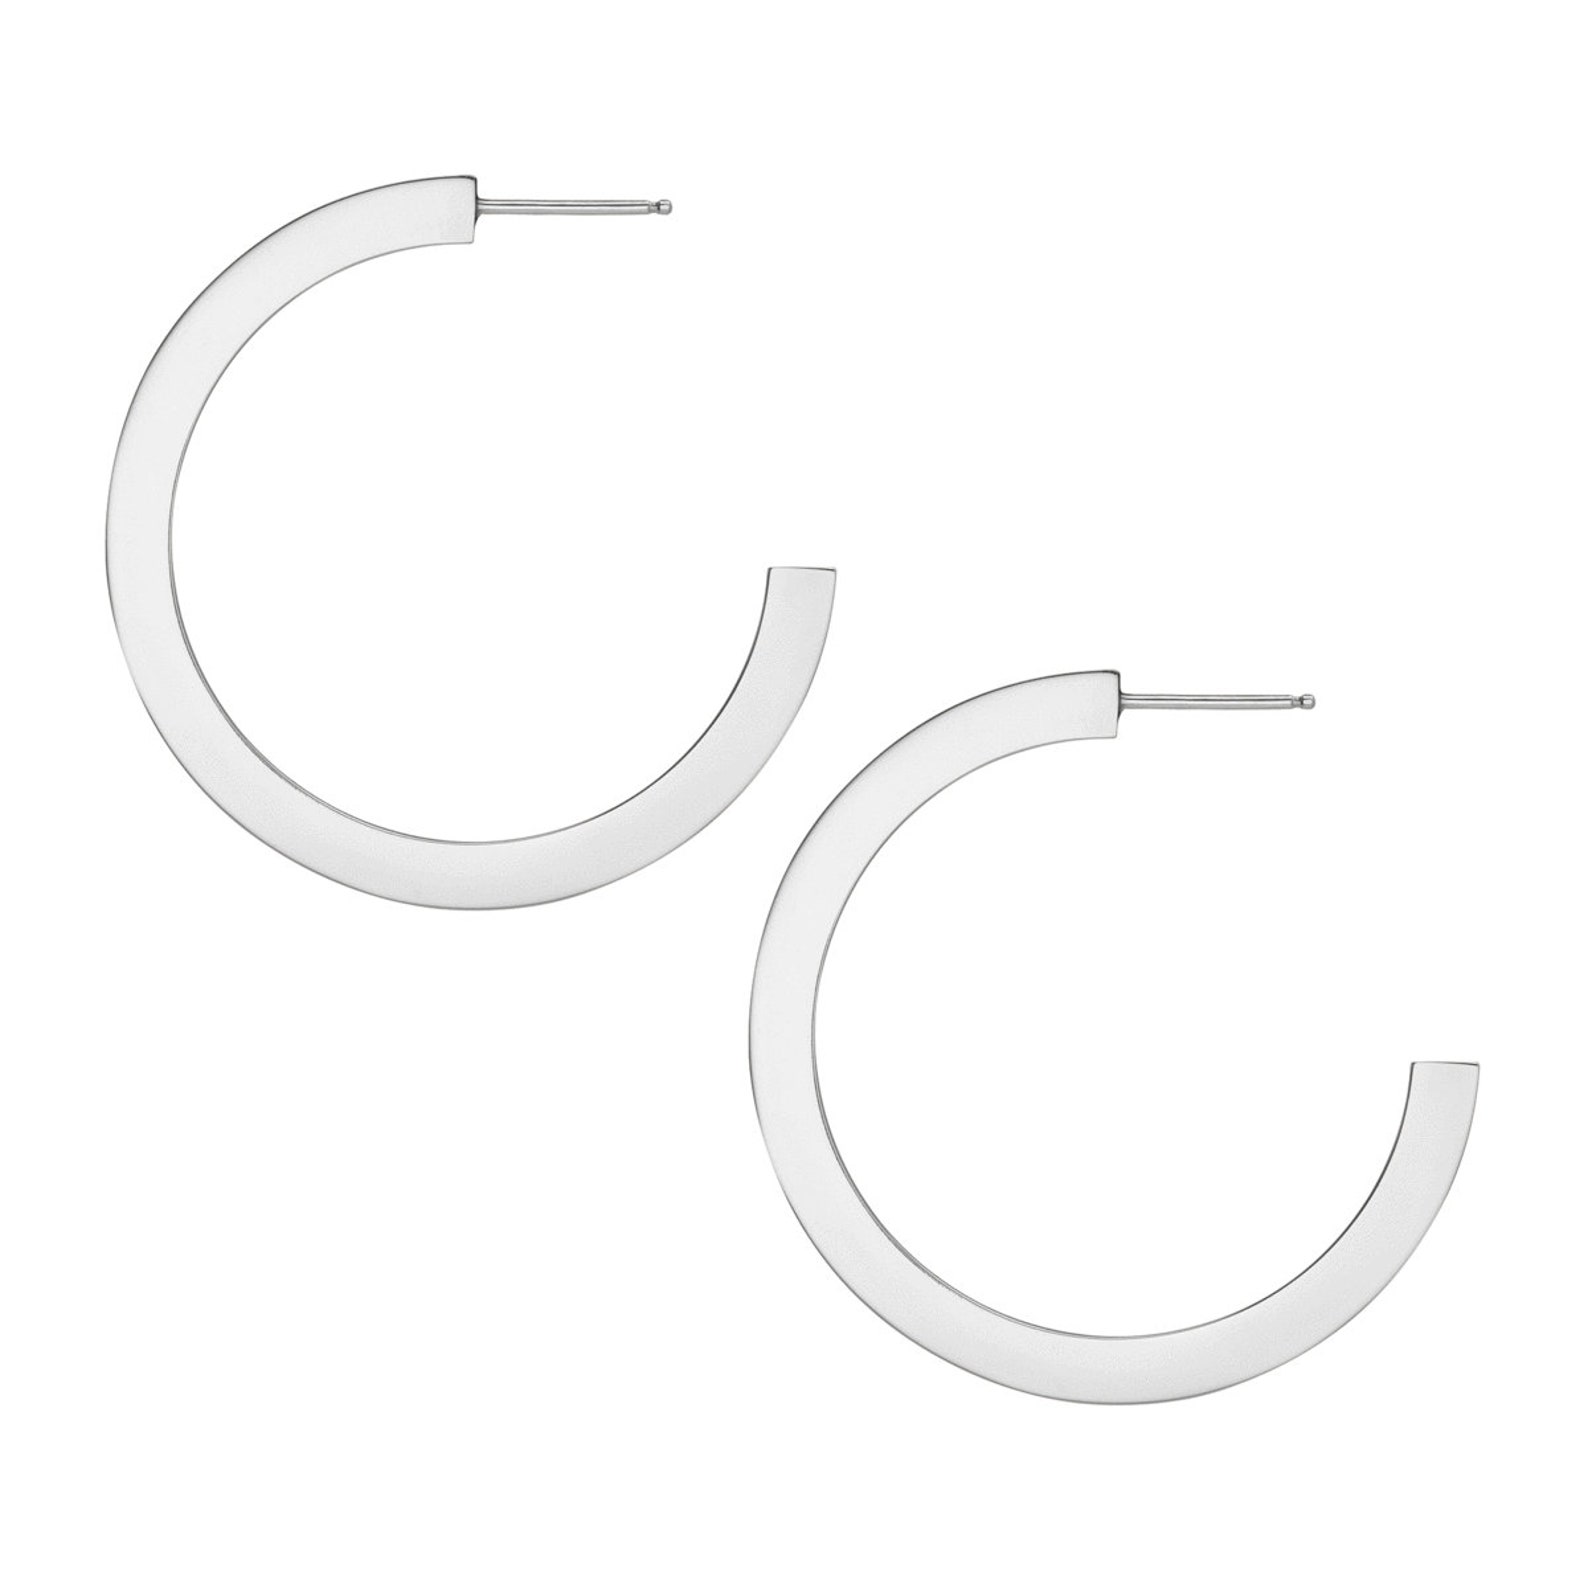 C Shape Gold Plated Hoop earrings Sterling Silver Earrings | Etsy